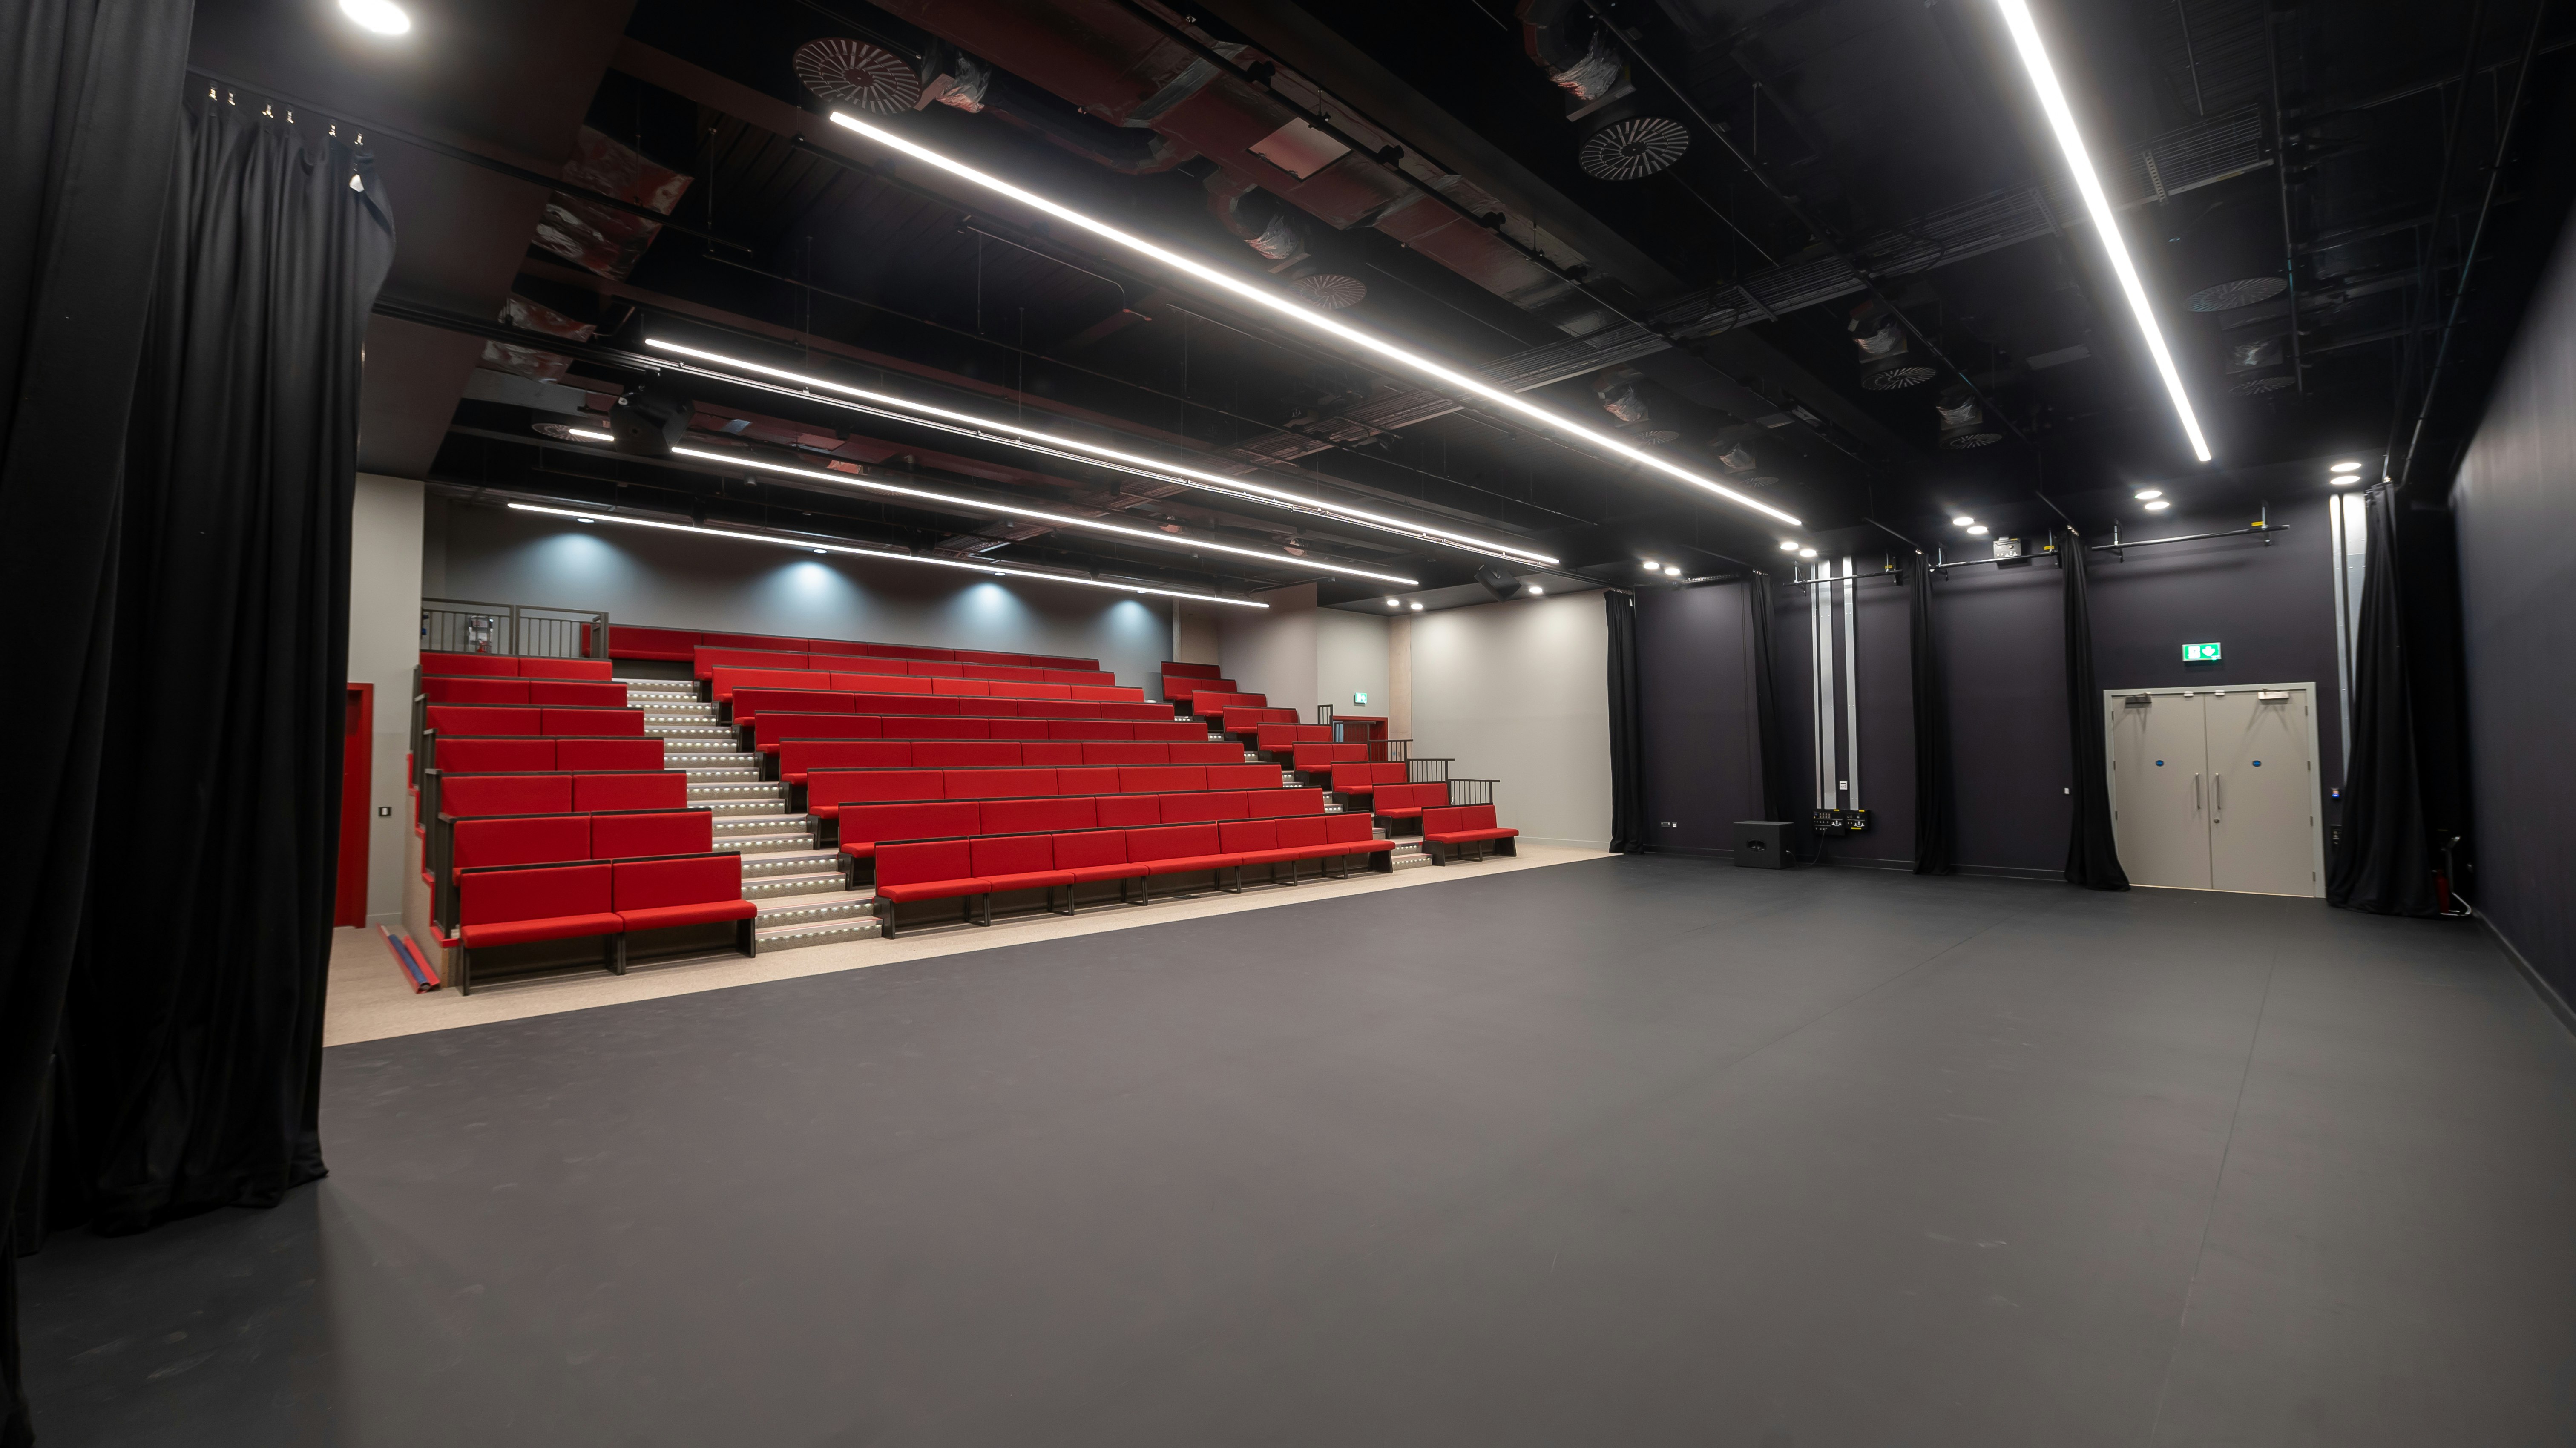 Royal Academy of Dance - Aud Jebsen Studio Theatre image 2